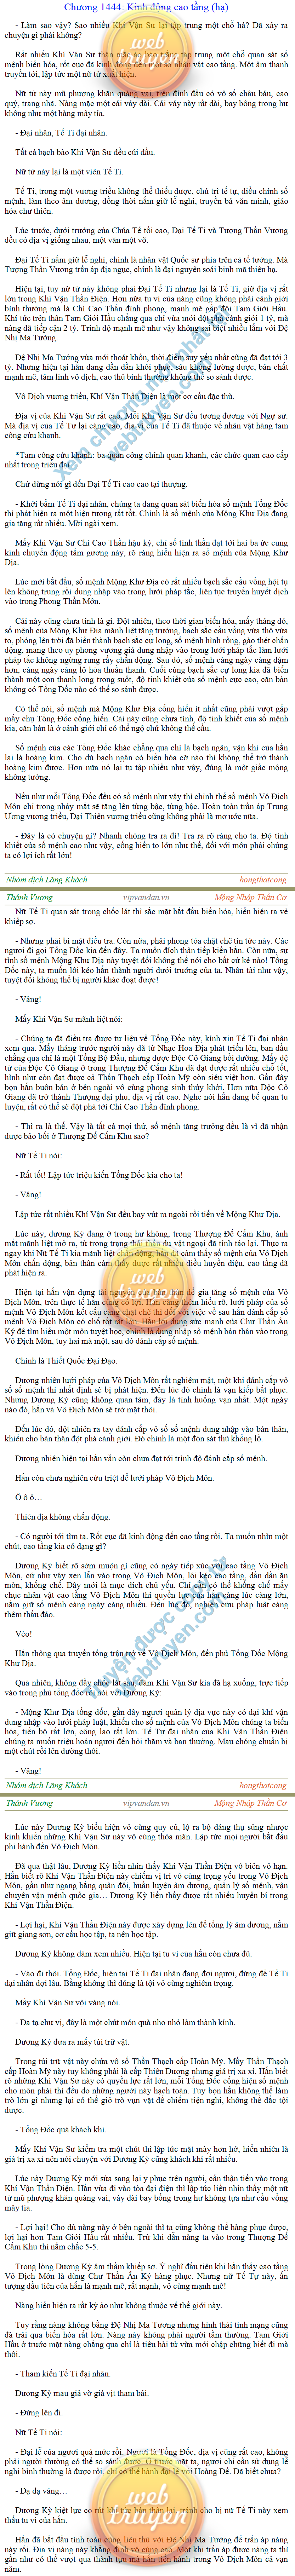 Thanh-vuong-1444.png